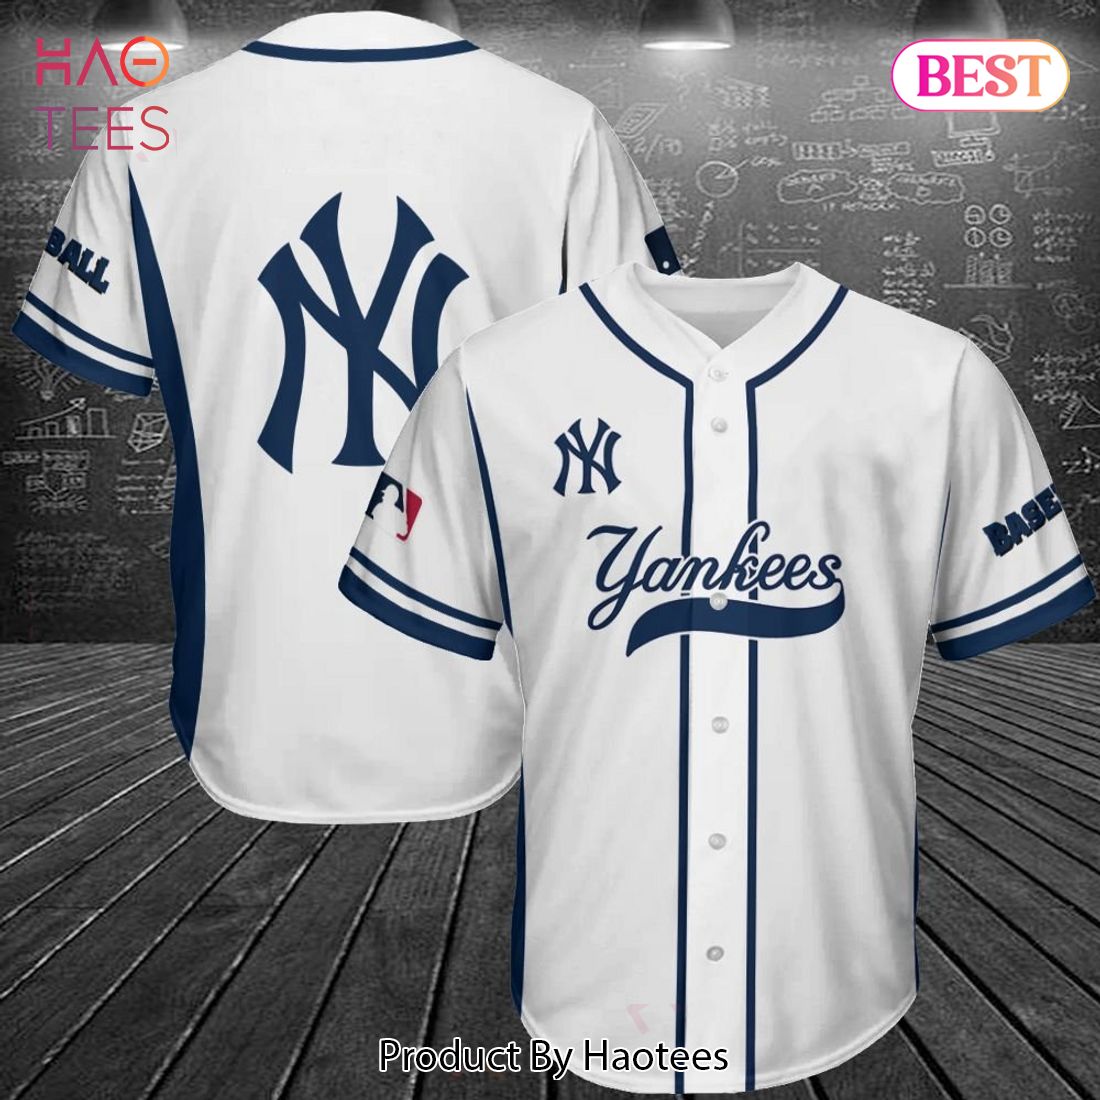 New York Yankees T-Shirt, Yankees Shirts, Yankees Baseball Shirts, Tees